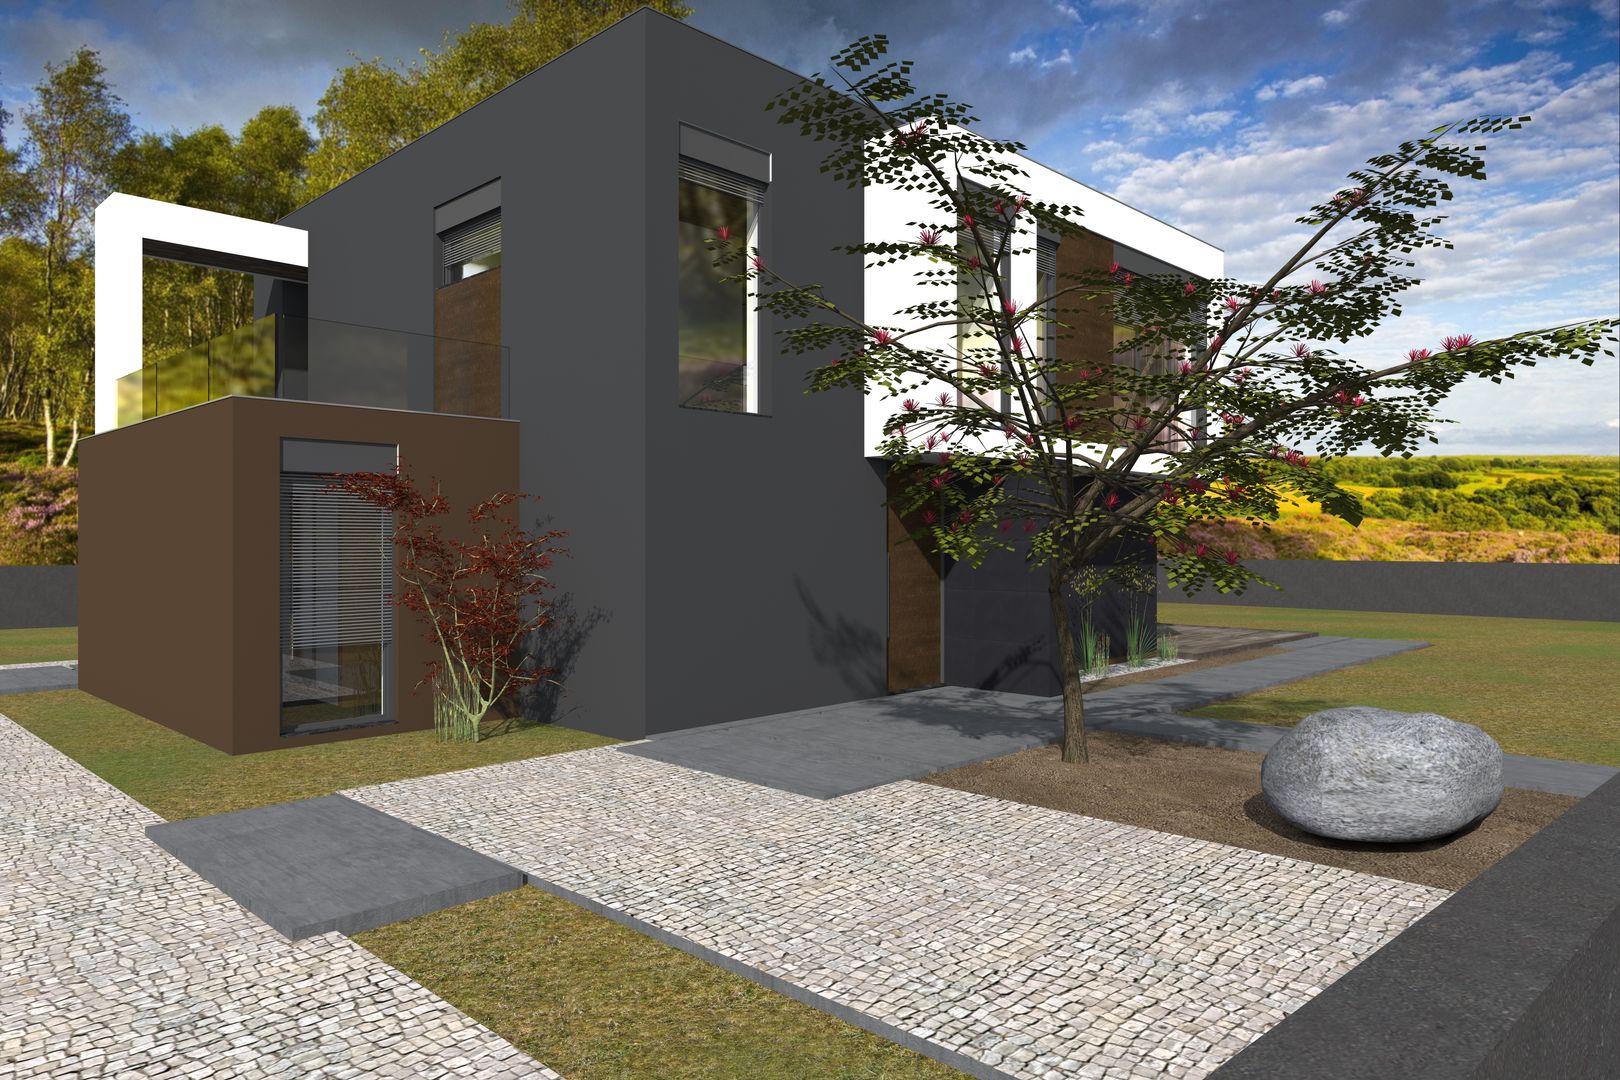 Projeto Opala, Magnific Home Lda Magnific Home Lda 現代房屋設計點子、靈感 & 圖片